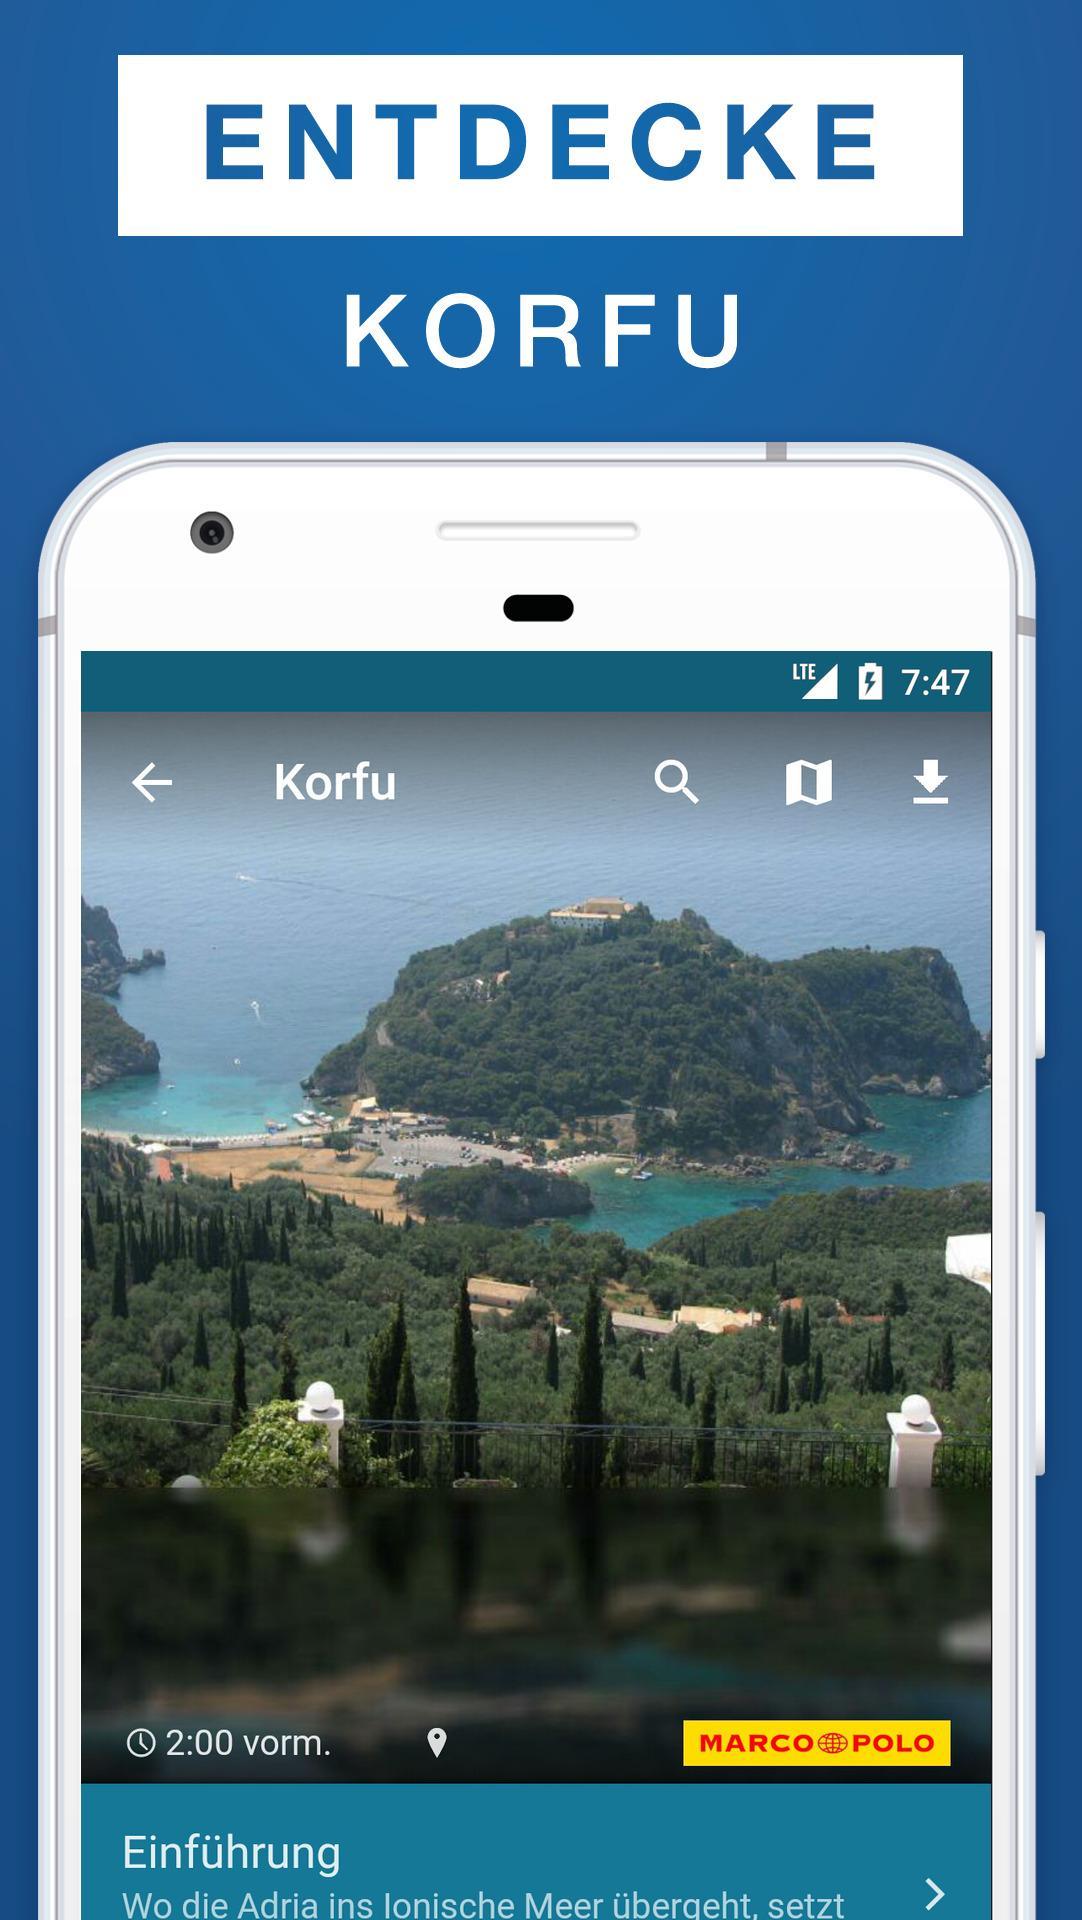 Korfu for Android - APK Download